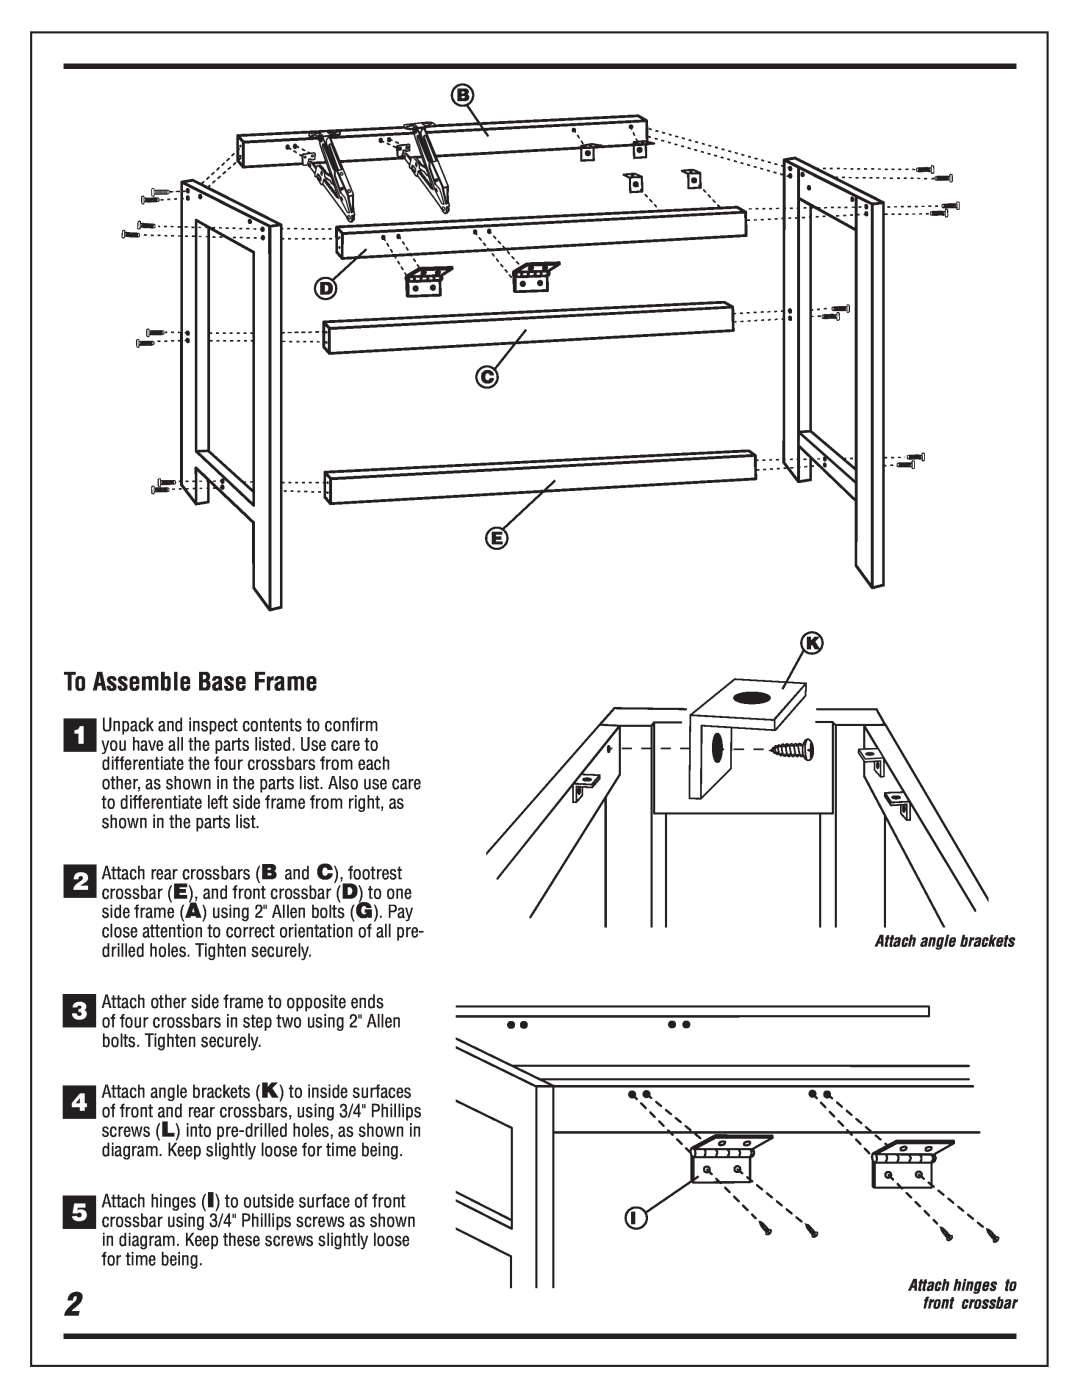 Alvin Titan II manual To Assemble Base Frame, C E 